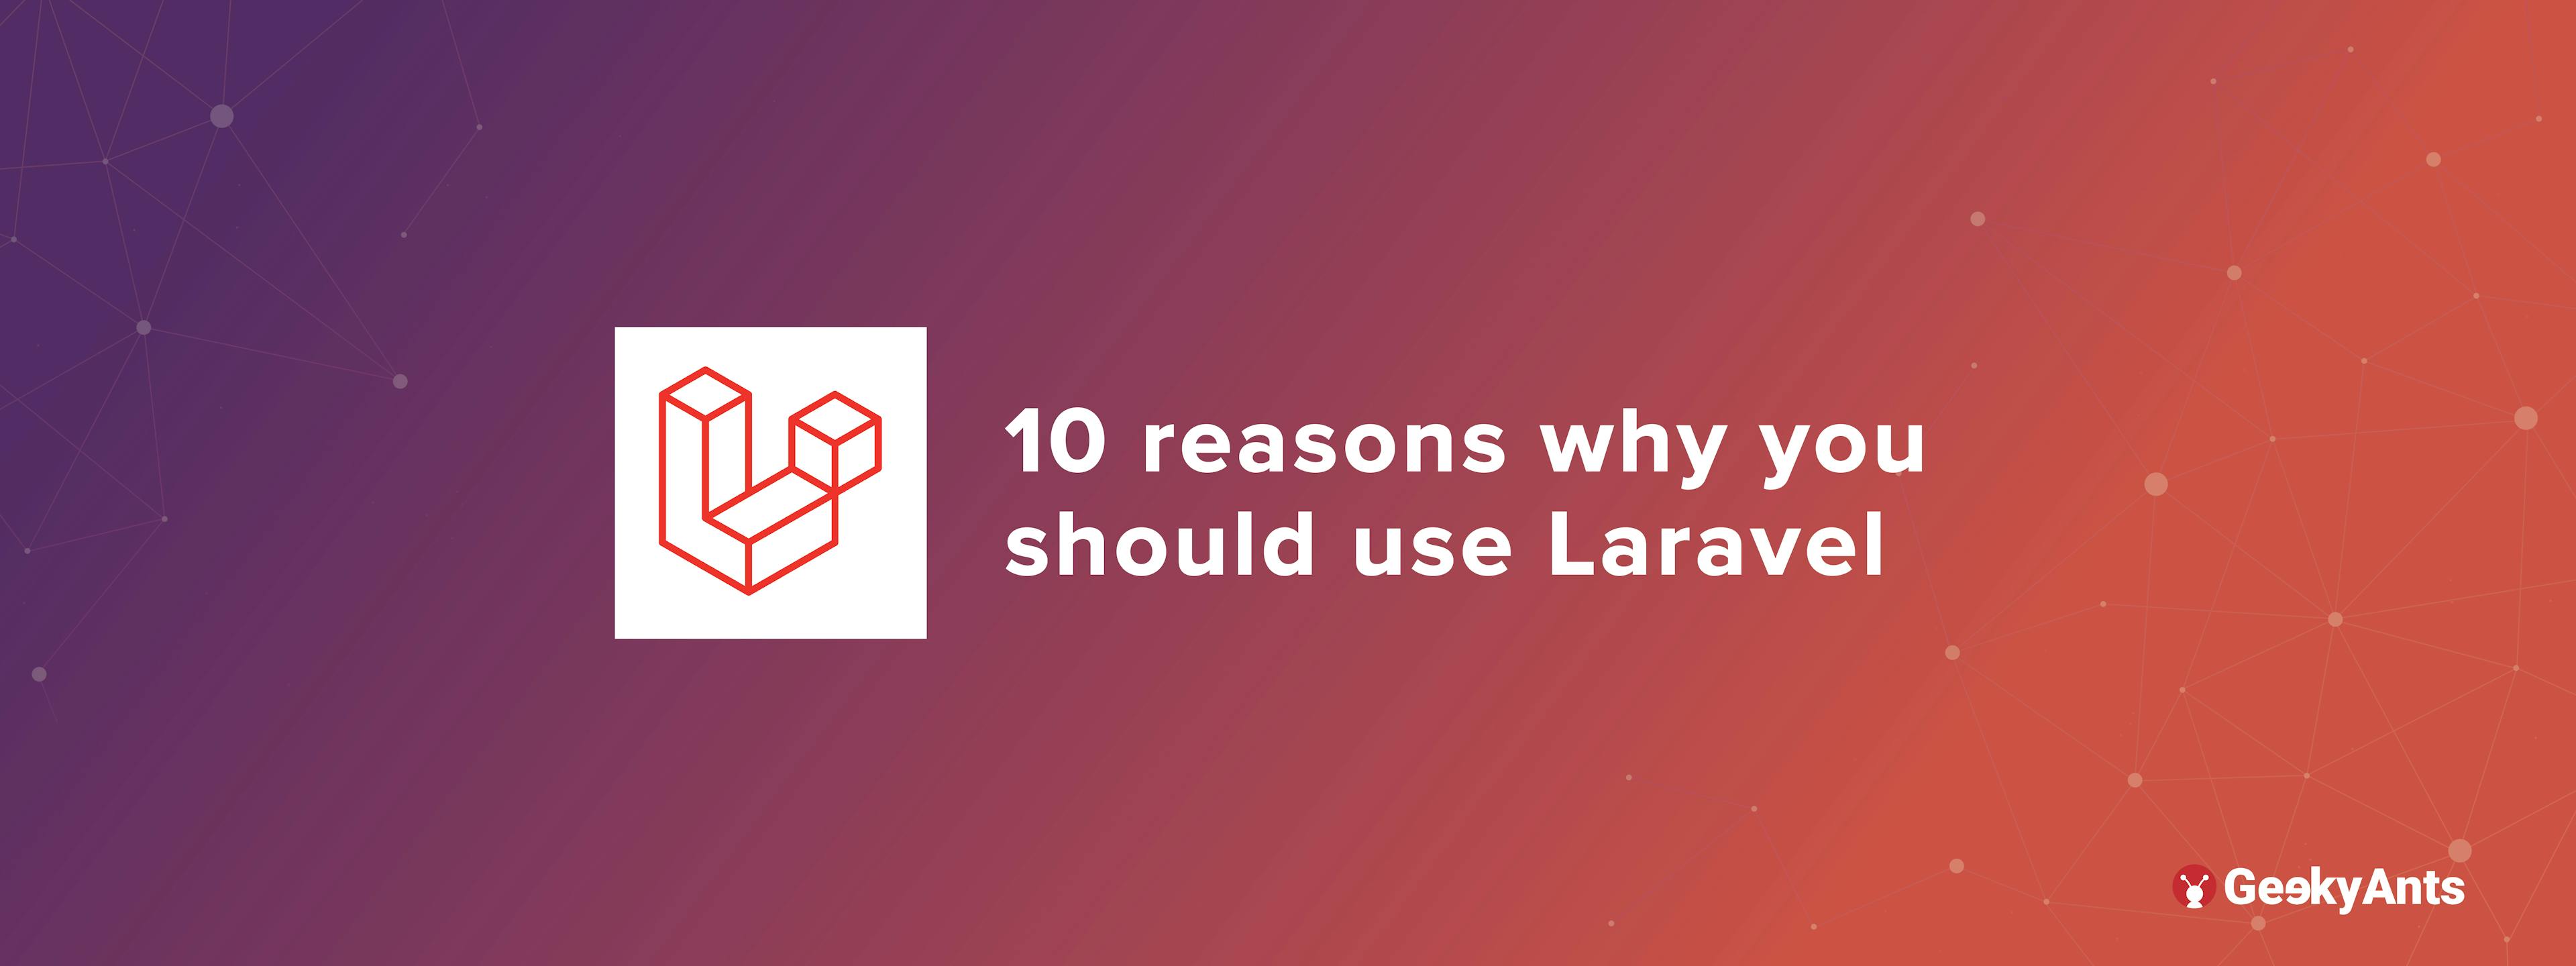 10 reasons why you should use Laravel